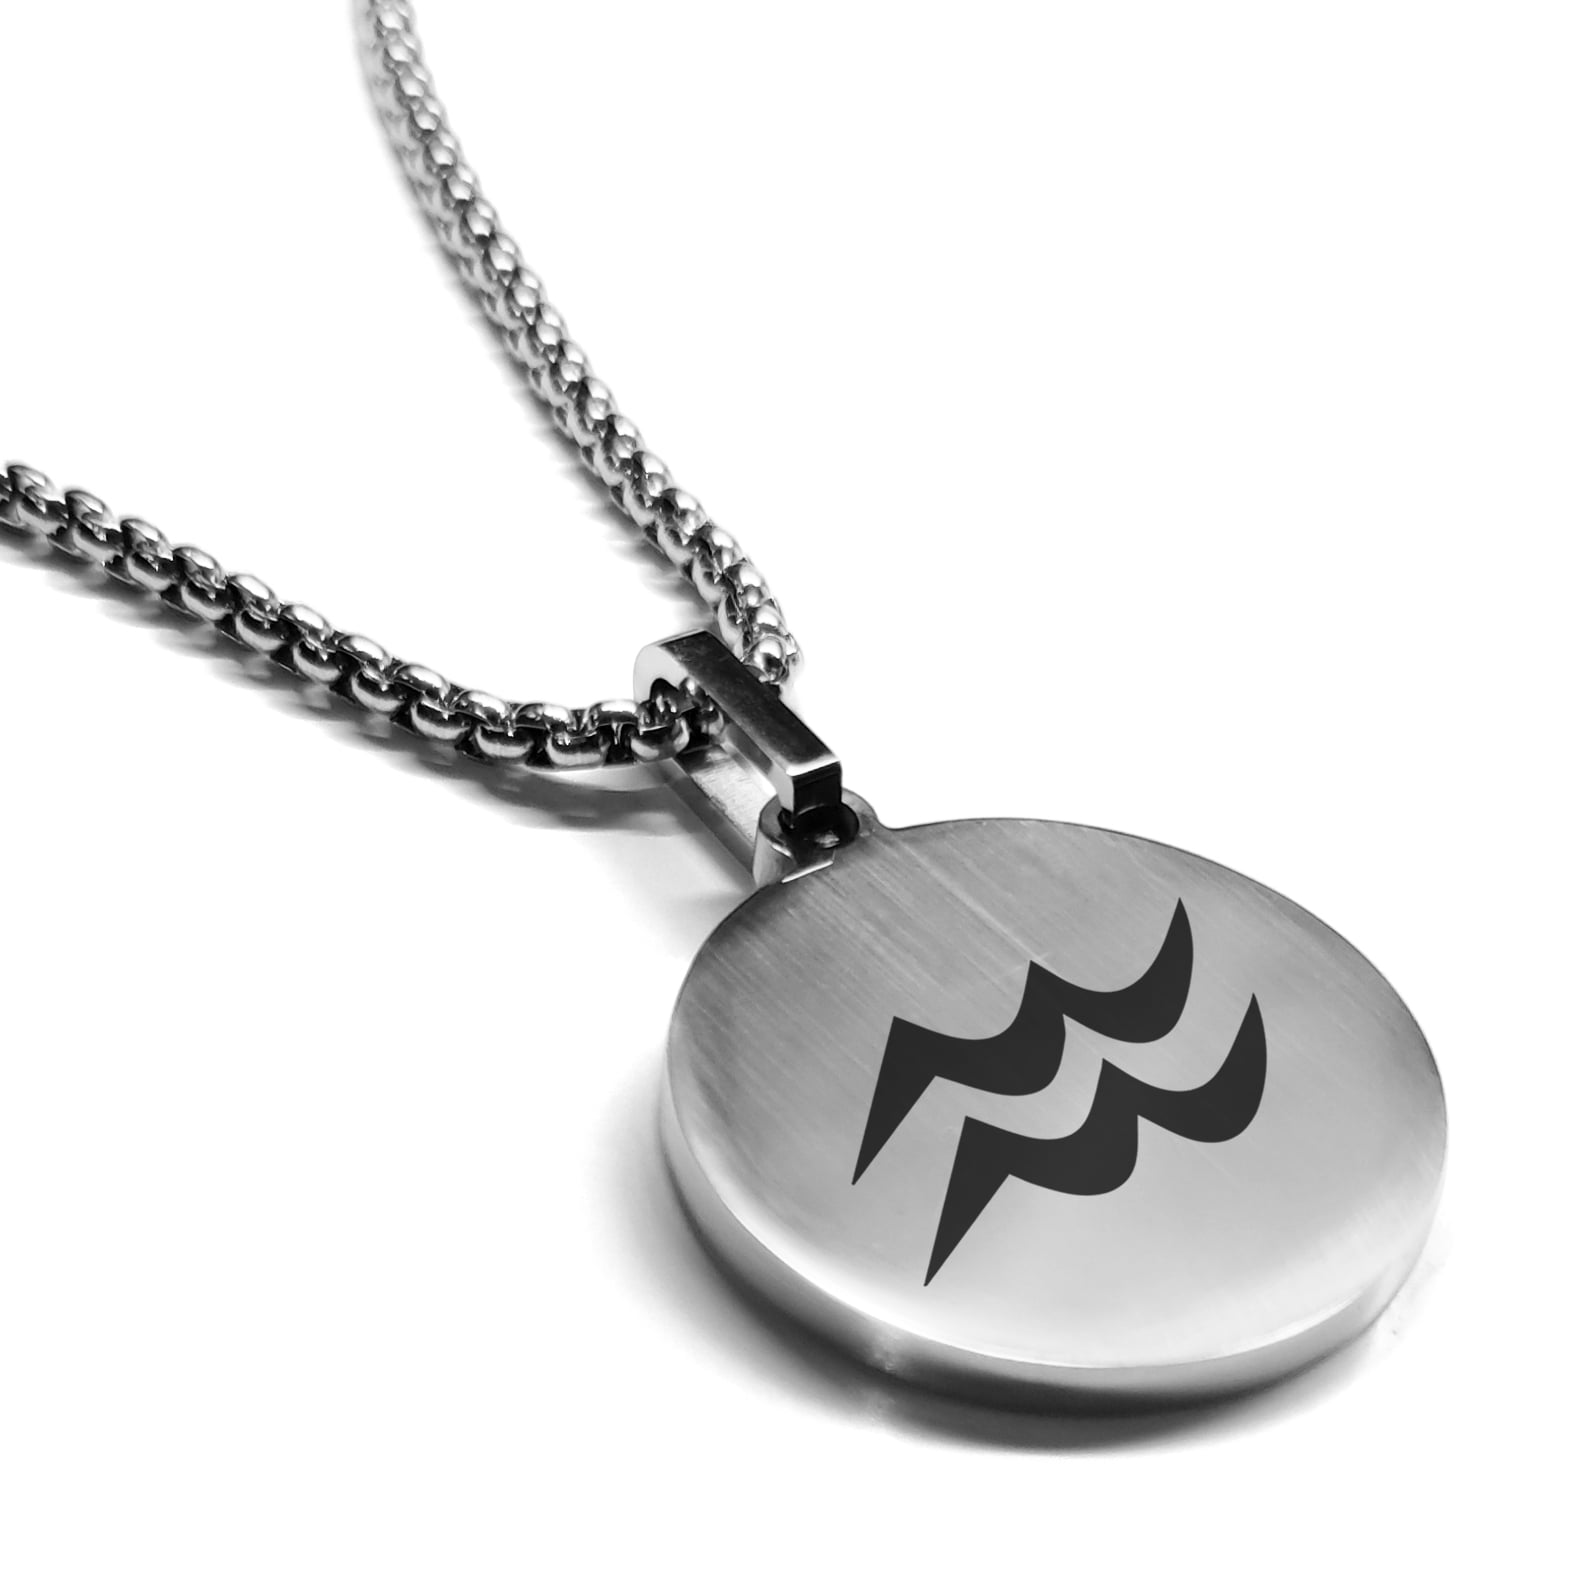 Aquarius Necklace - Zodiac Pendant Necklace In Silver